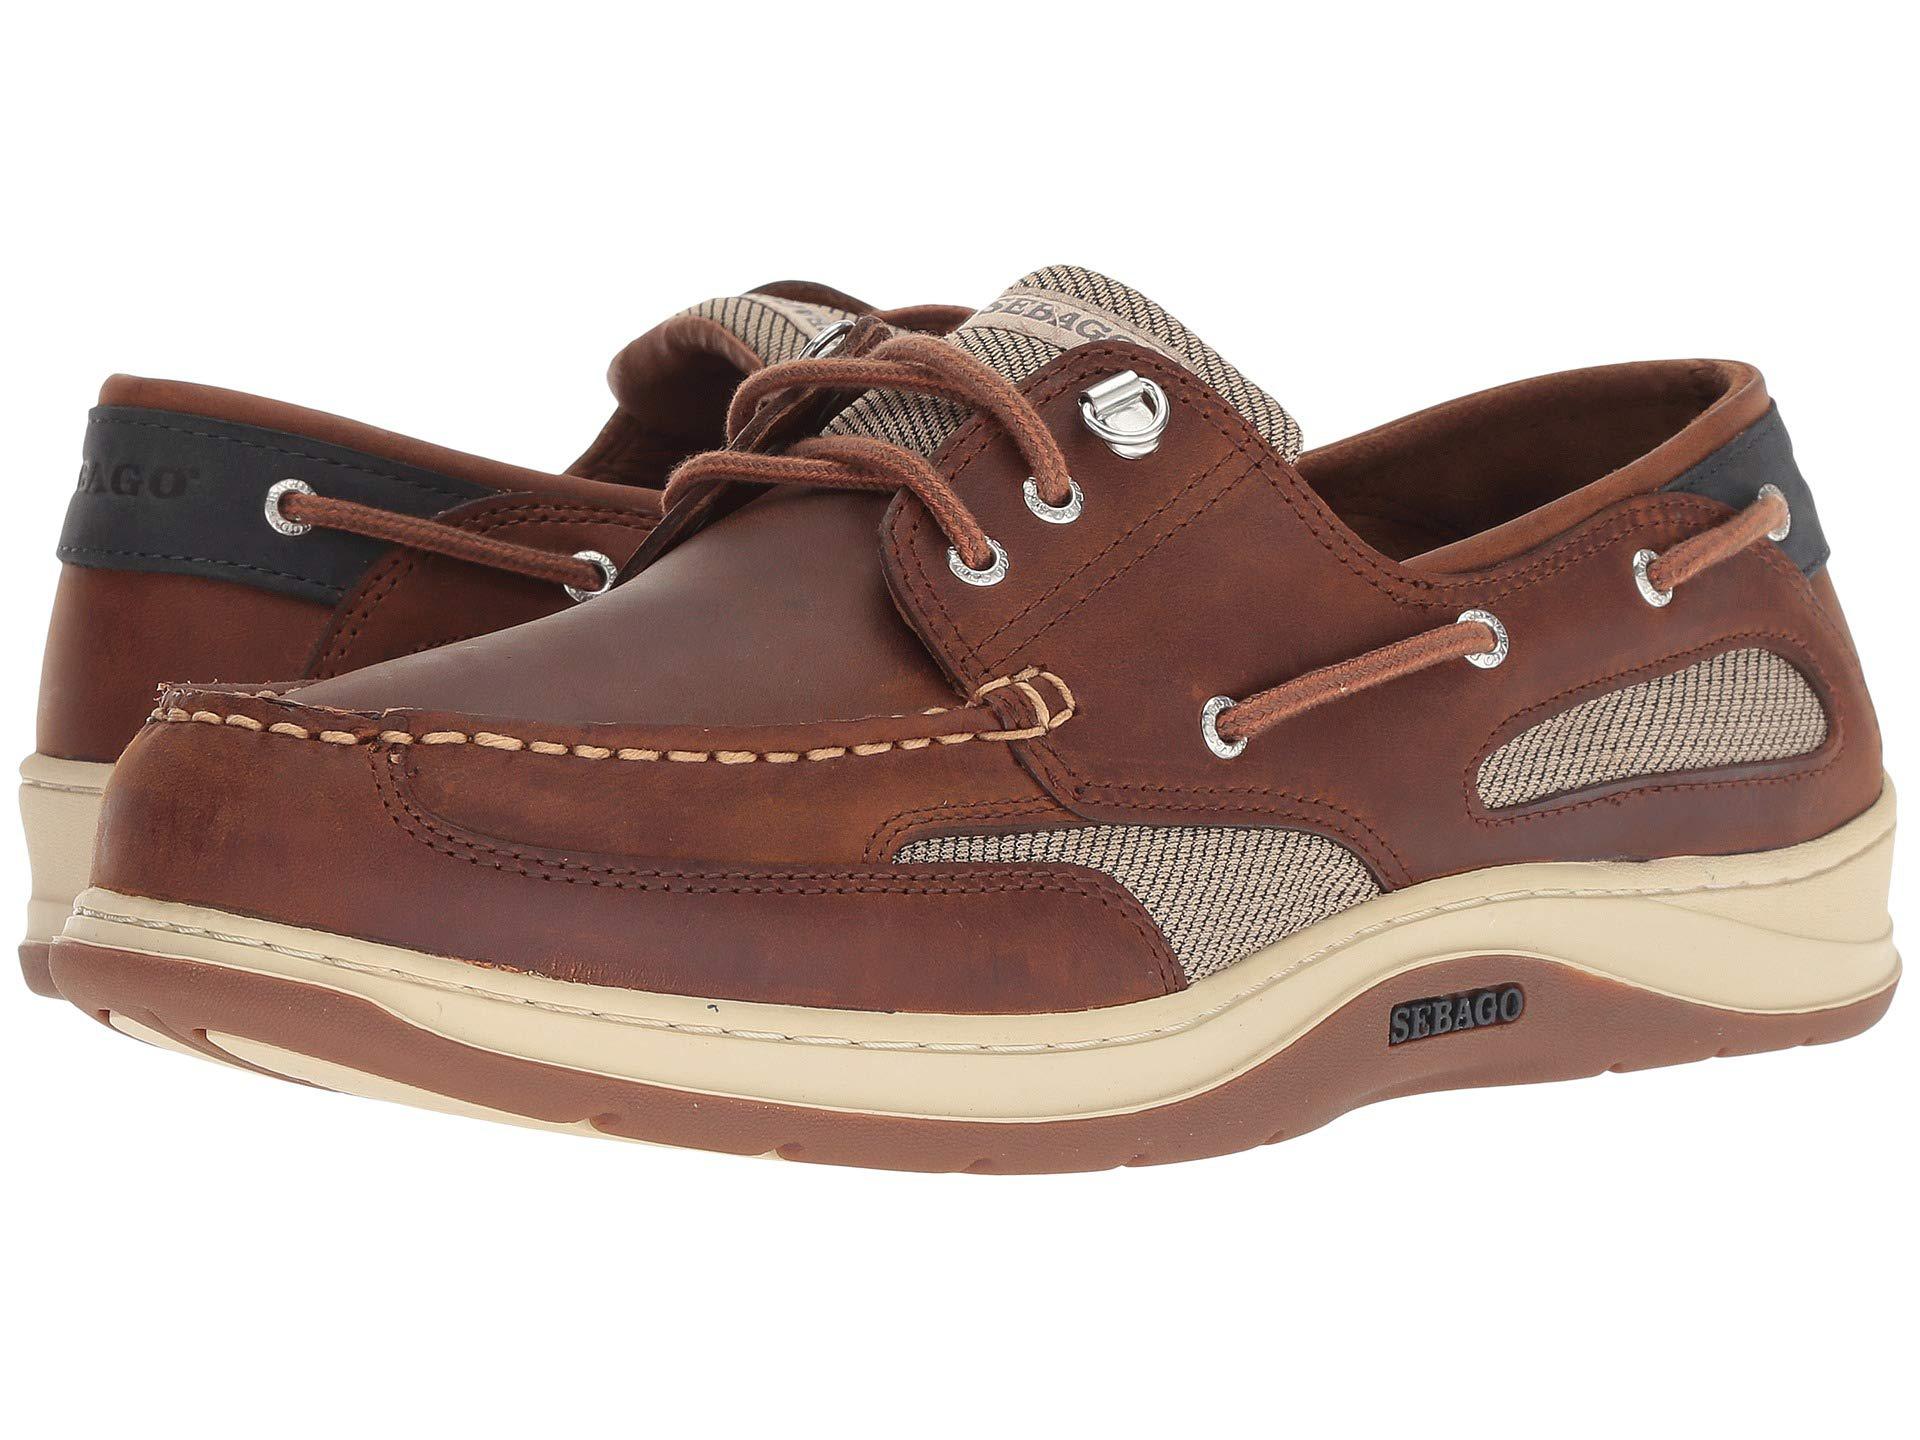 Lyst - Sebago Clovehitch Ii (brown Cinammon) Men's Shoes in Brown for Men